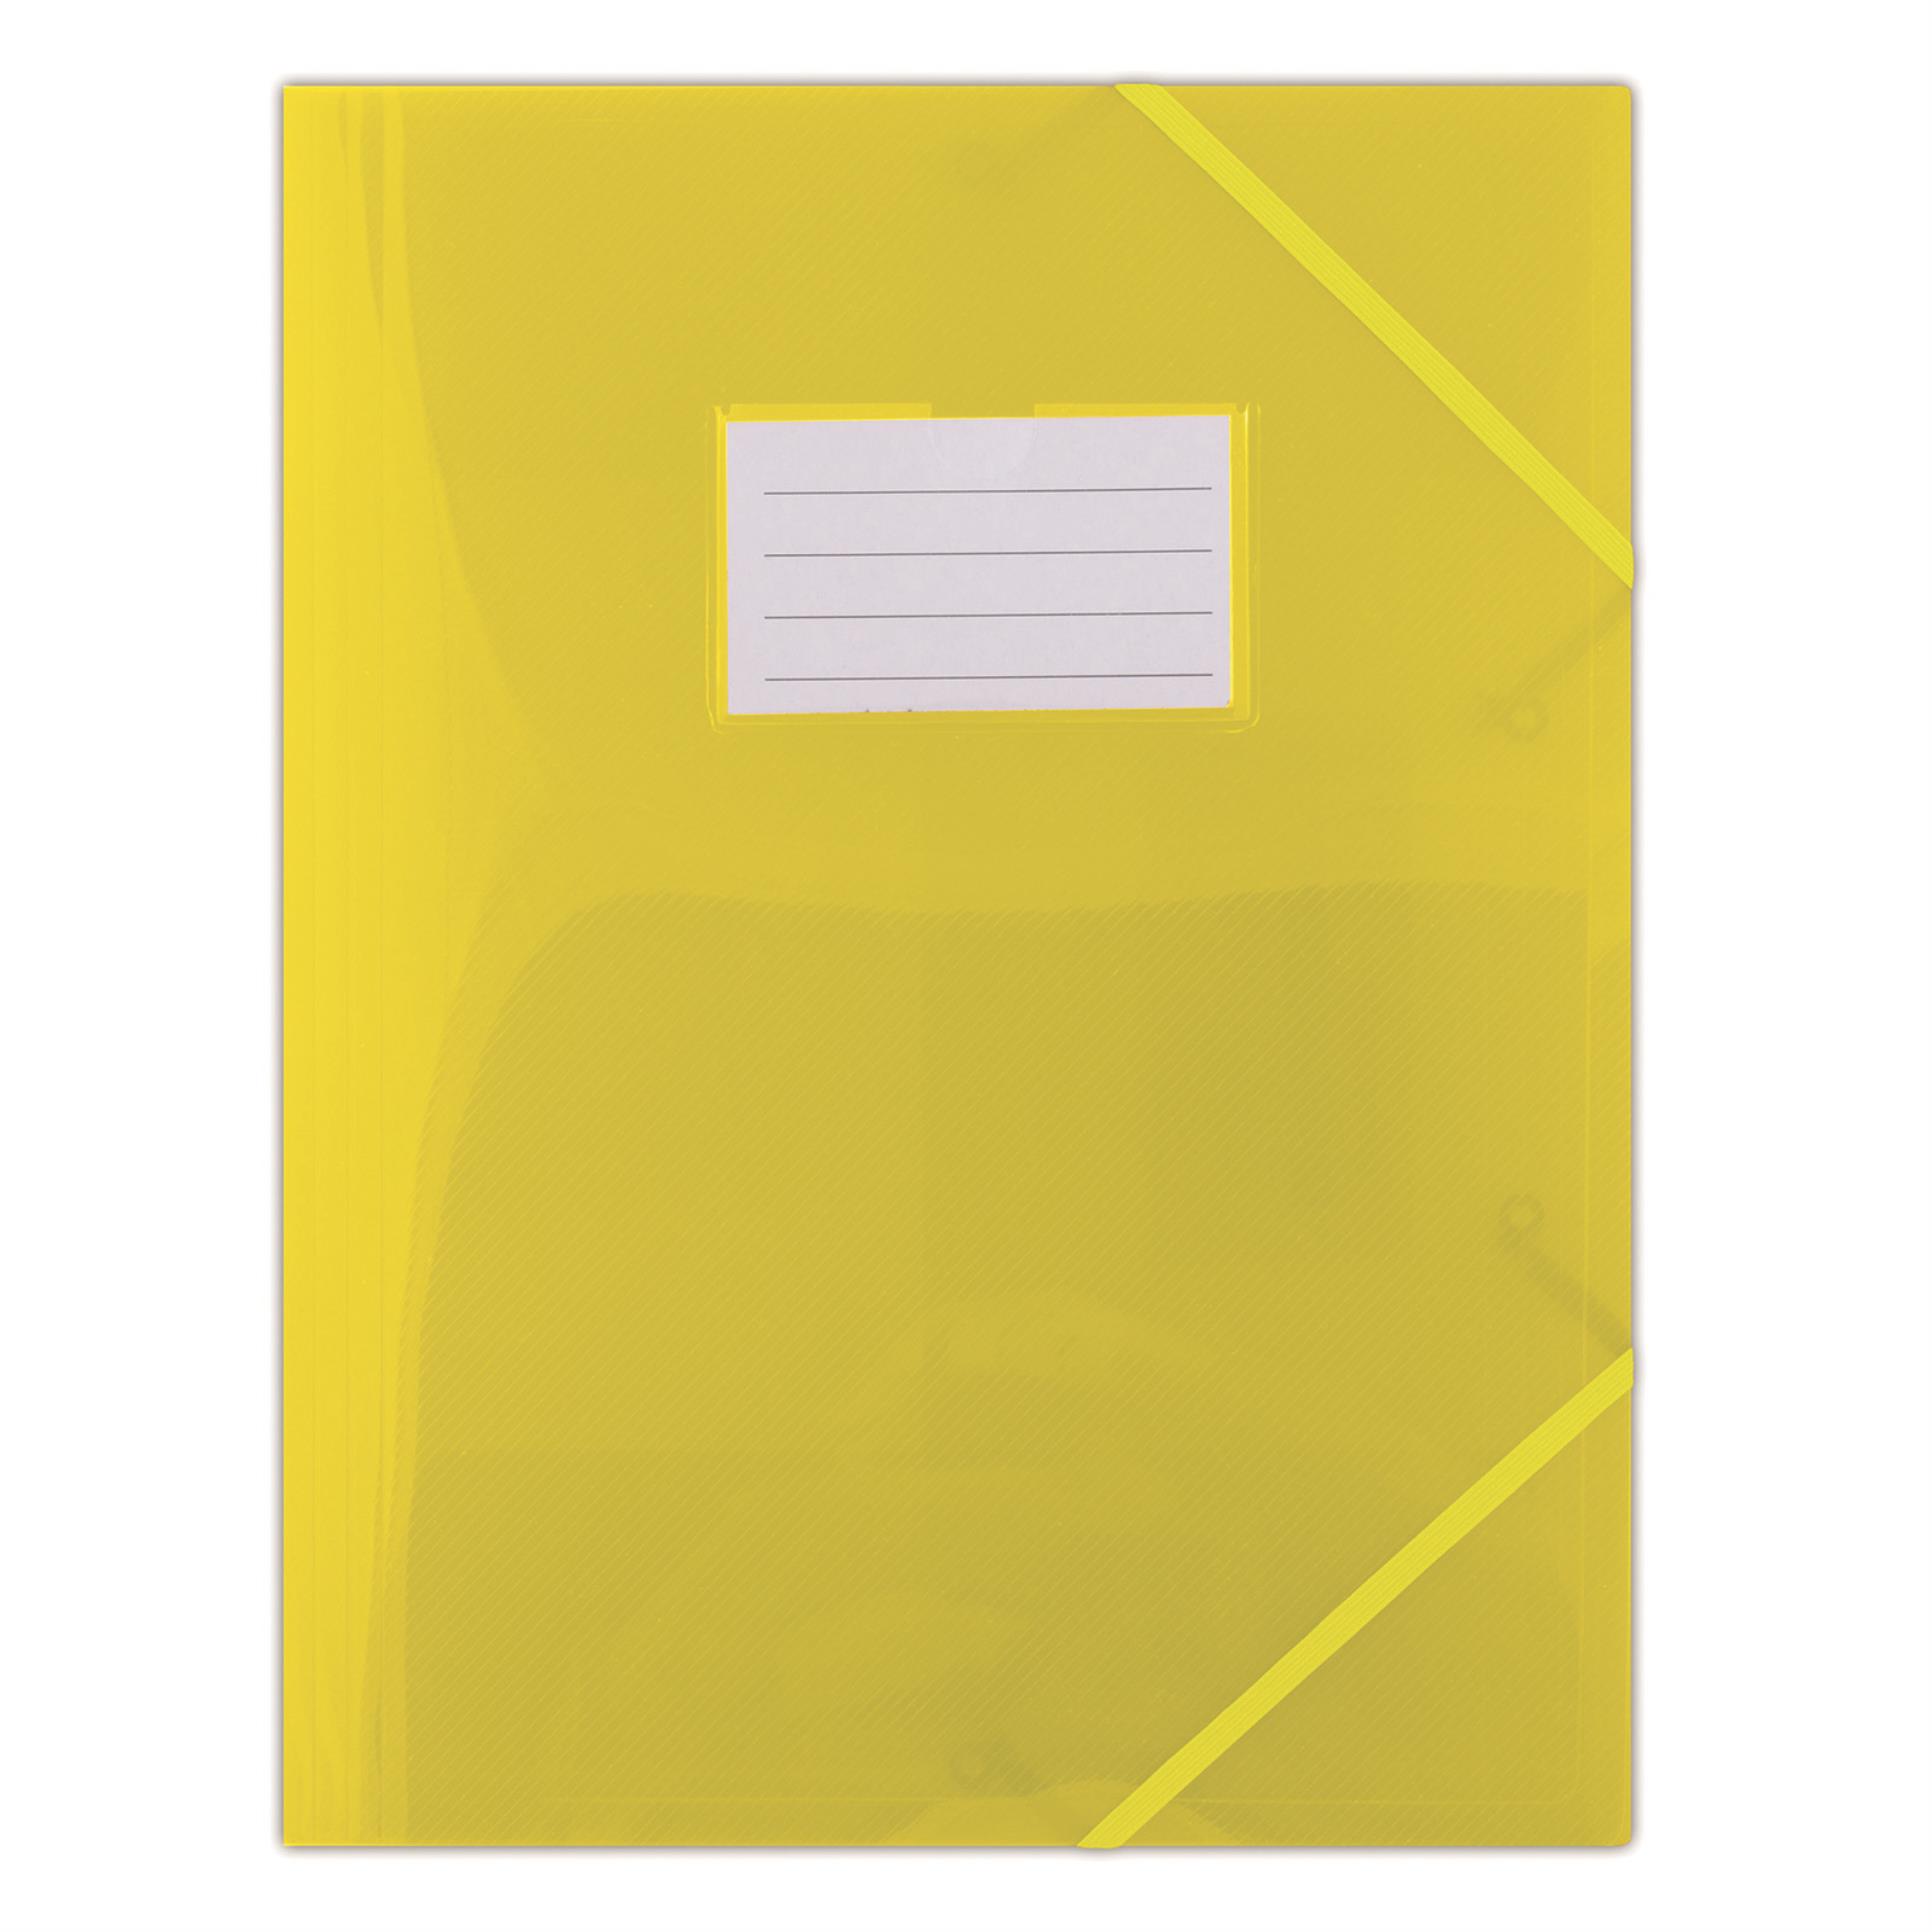 Desky s chlopněmi a gumičkou Donau - A4, plastové, žluté, 1 ks